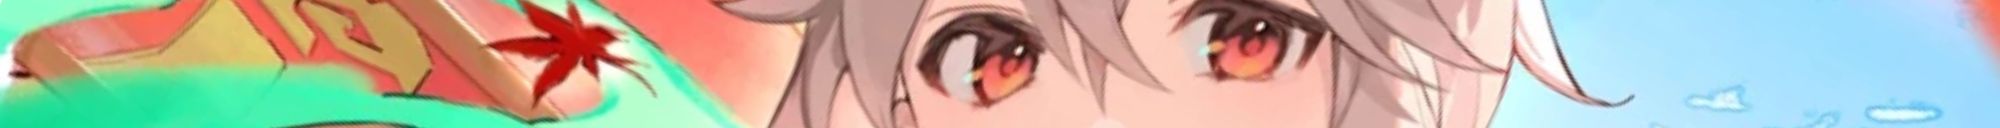 kazuha's eyes - genshin impact